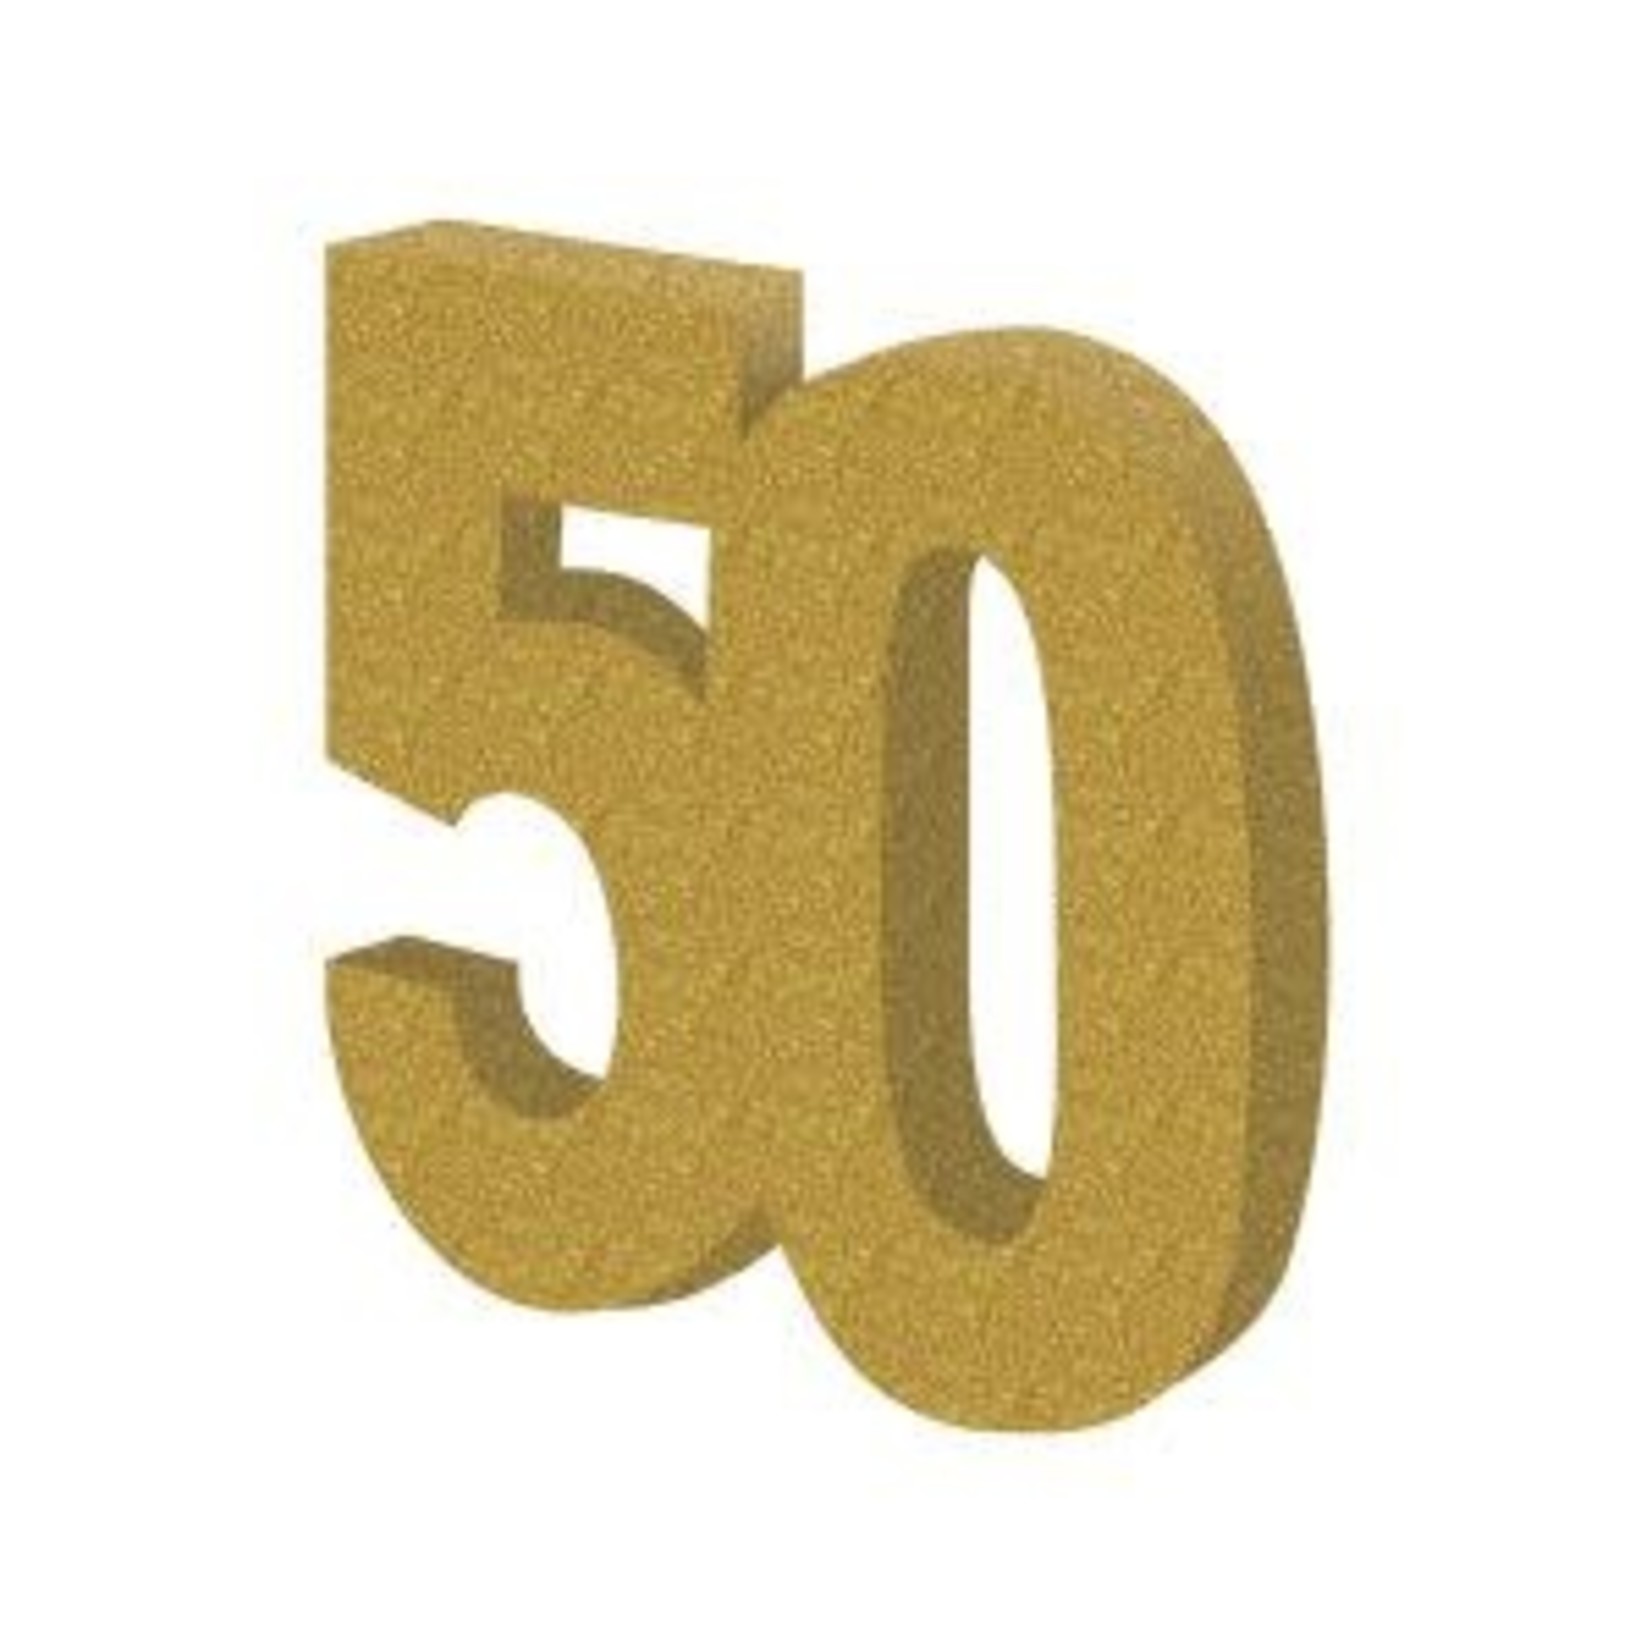 Beistle 3-D Gold Glittered '50' Centerpiece - 1ct.